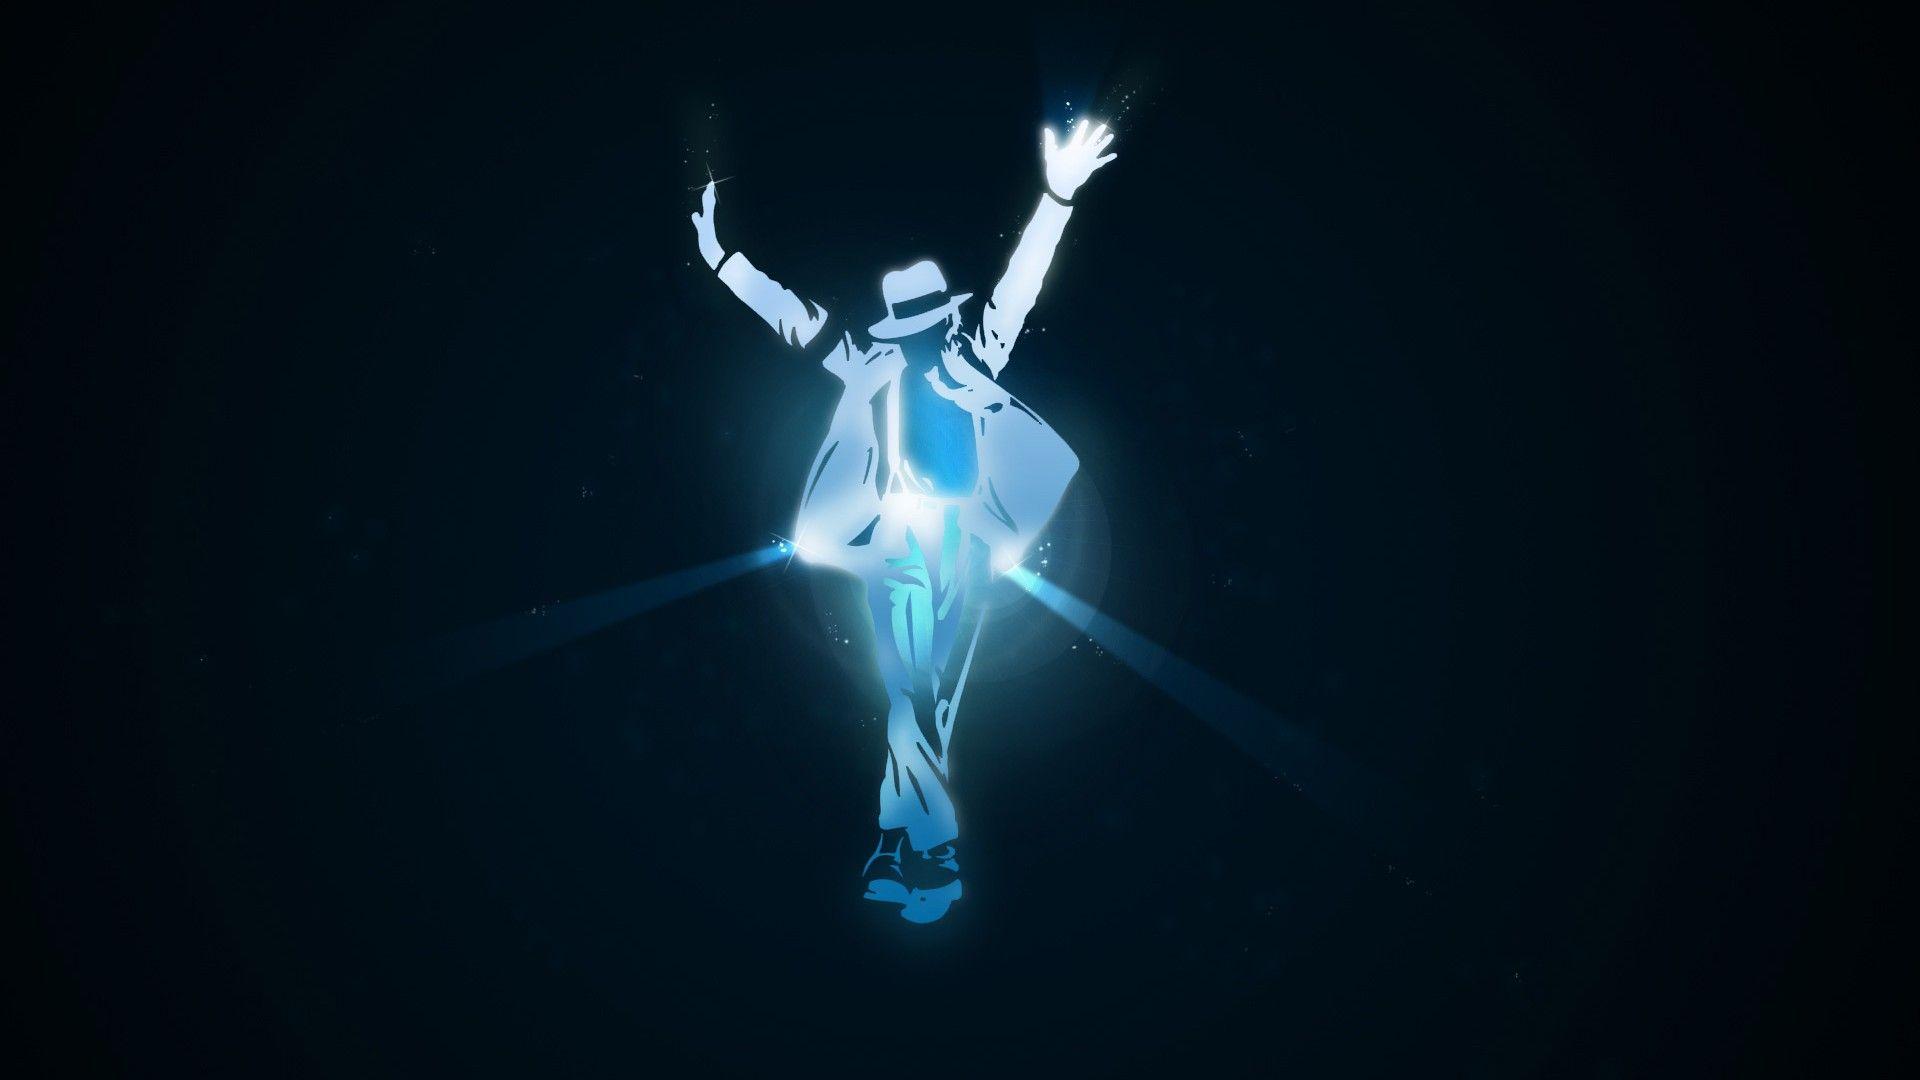 Download The King of Pop Michael Jackson Wallpaper Free